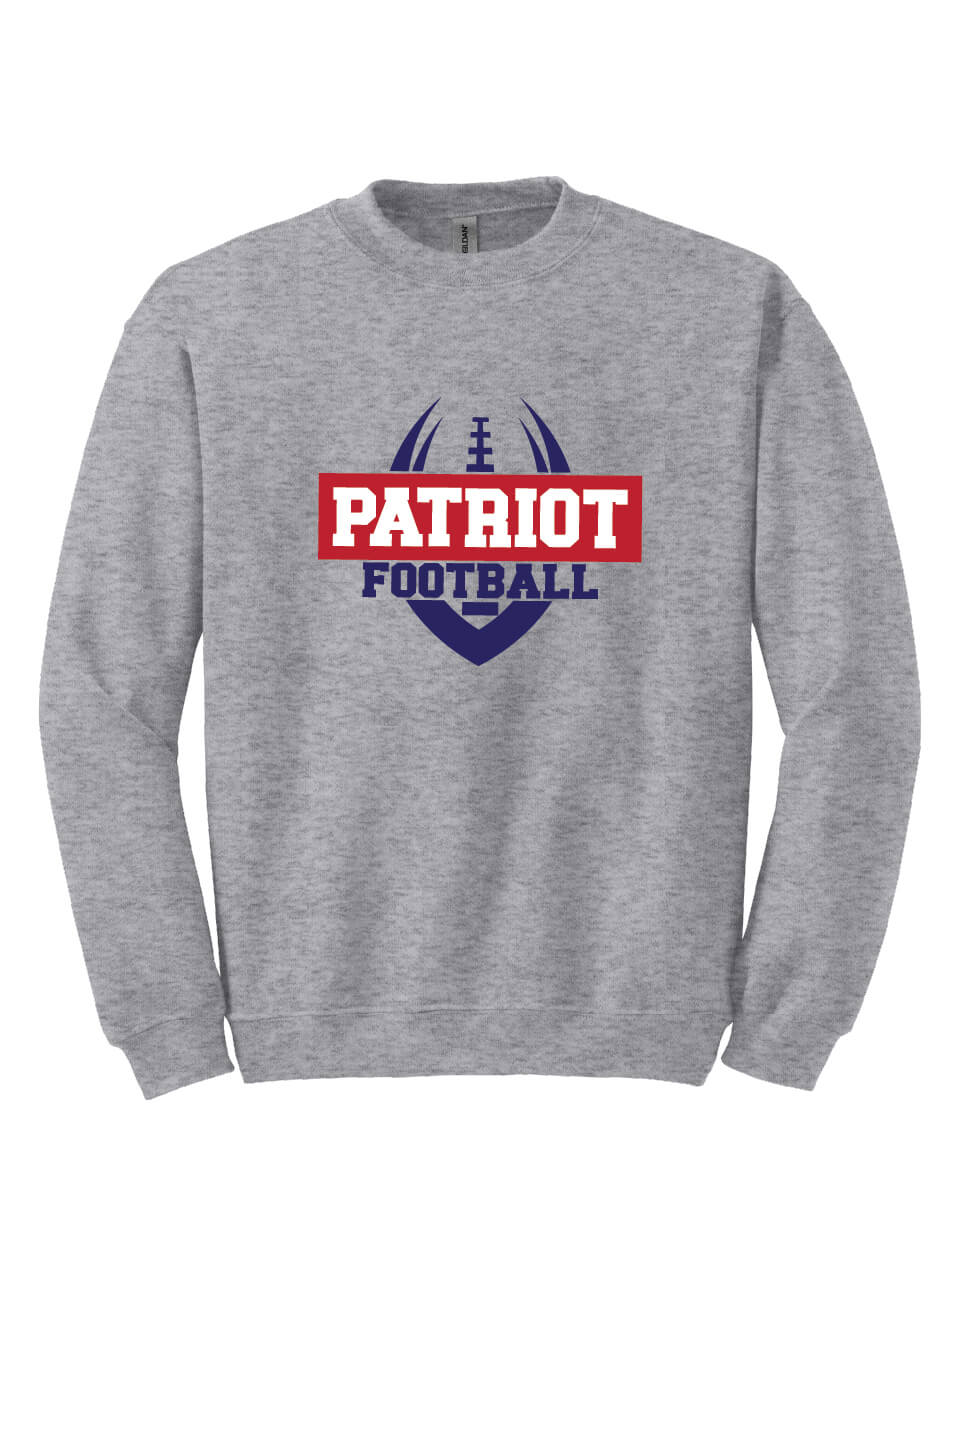 Patriot Football Crewneck Sweatshirt (Youth) gray